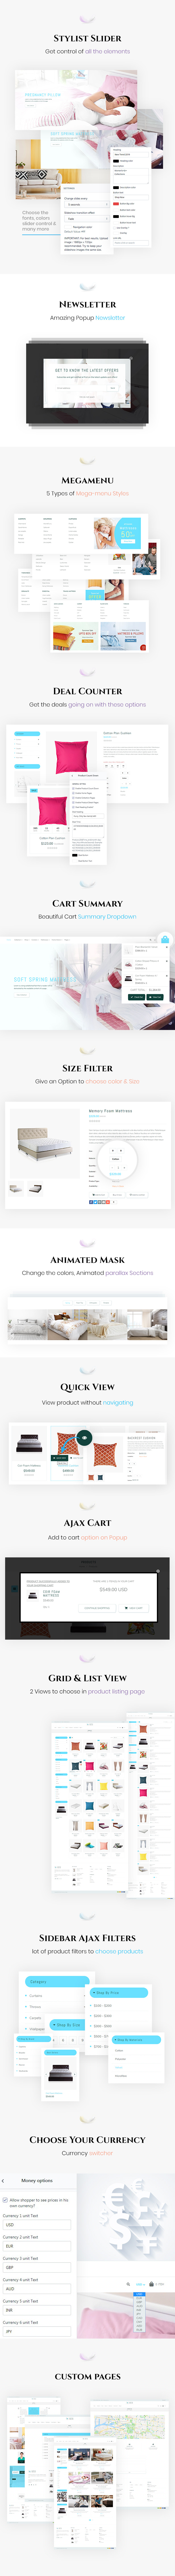 Softie | Shopify Theme for Beds, Pillows Mattress & Interior Shop - 3